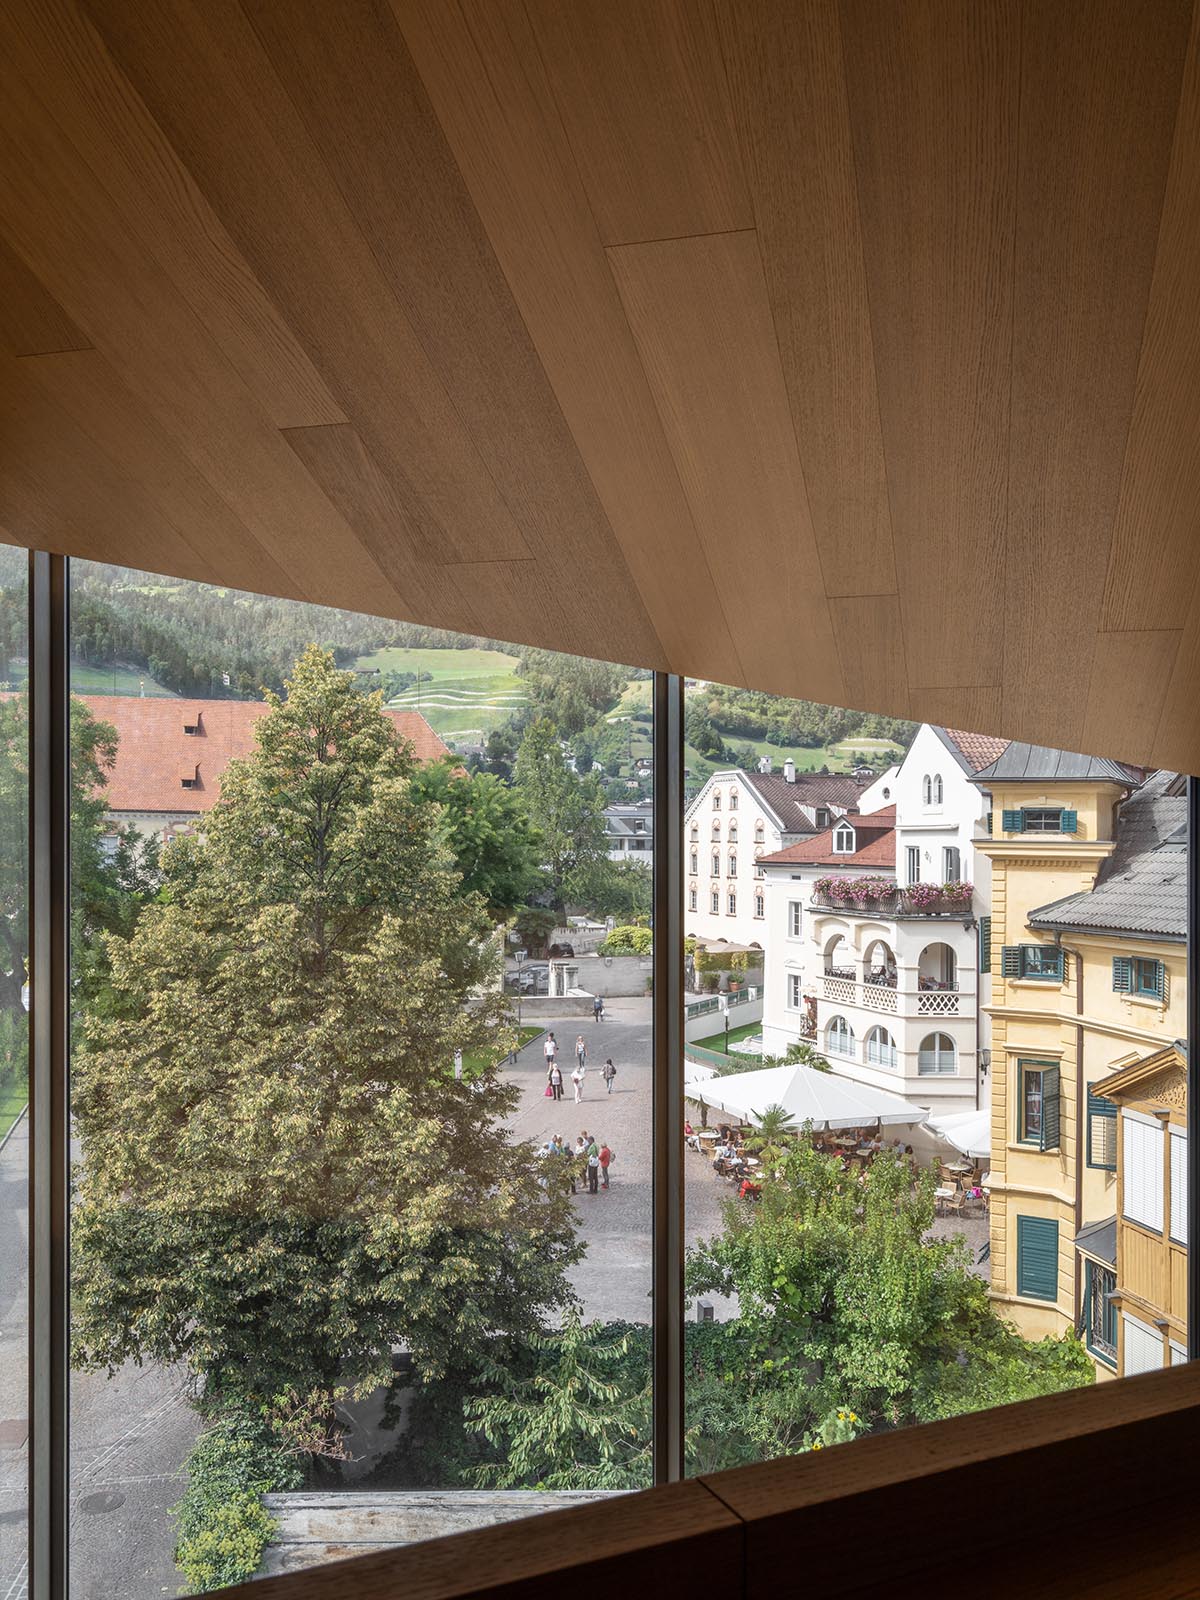 Brixen Public Library by Carlana Mezzalira Pentimalli acts like 